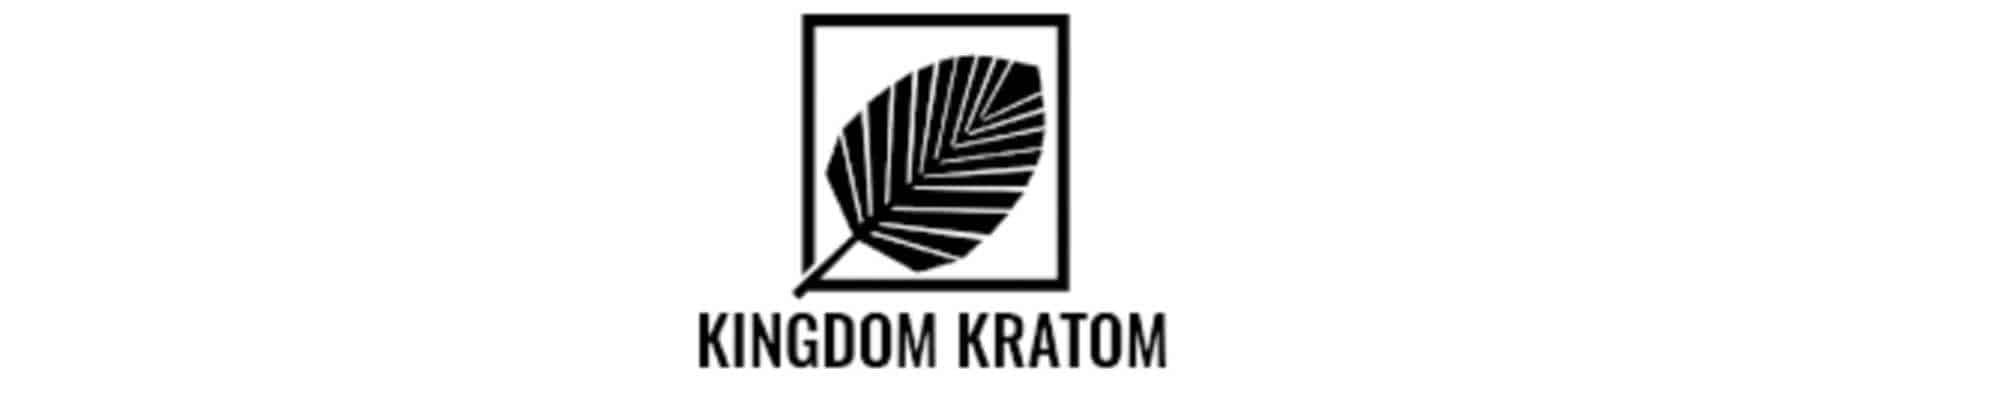 image of kingdom kratom